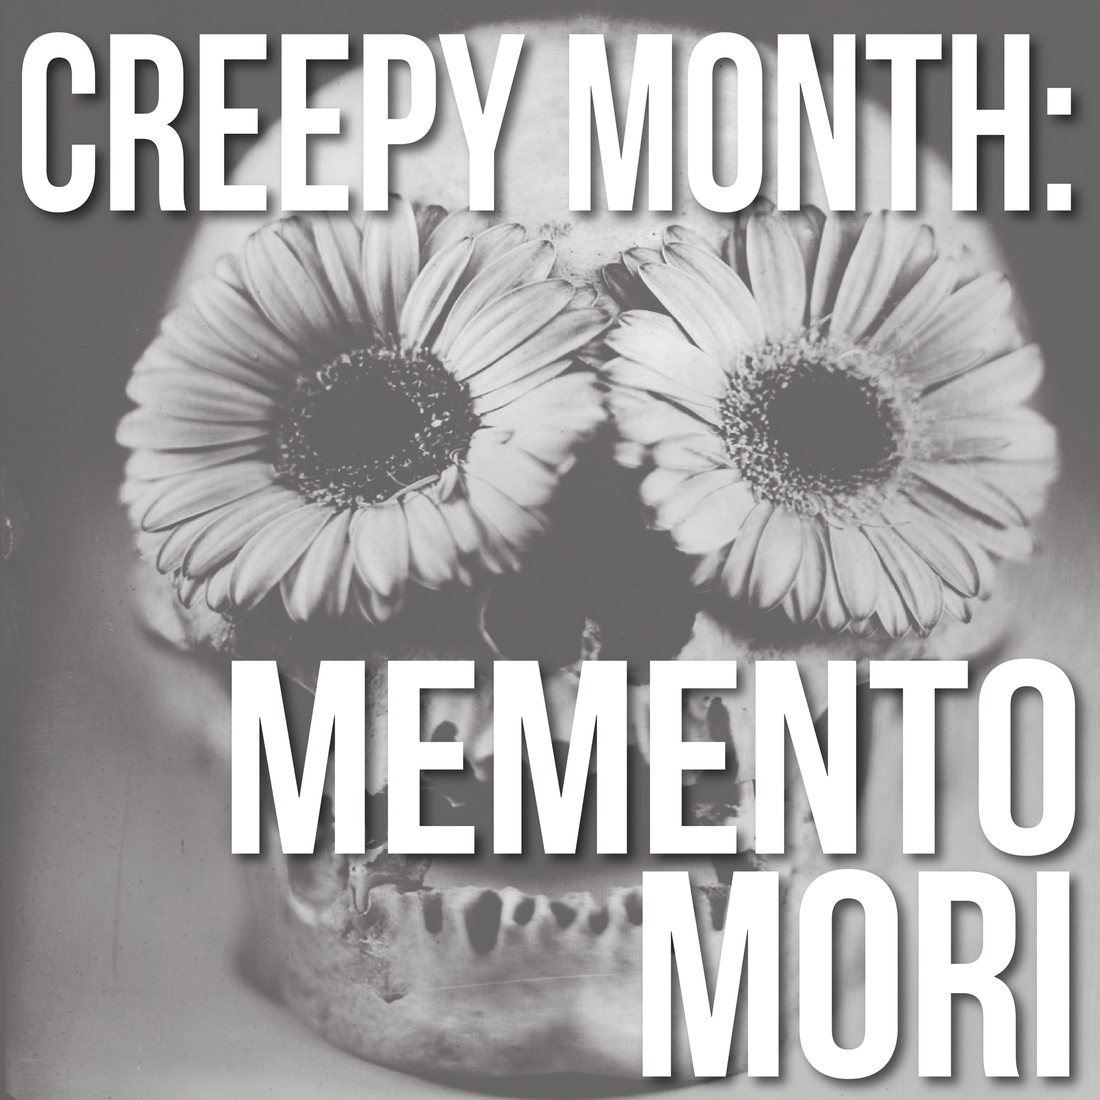 Creepy Month: Memento Mori